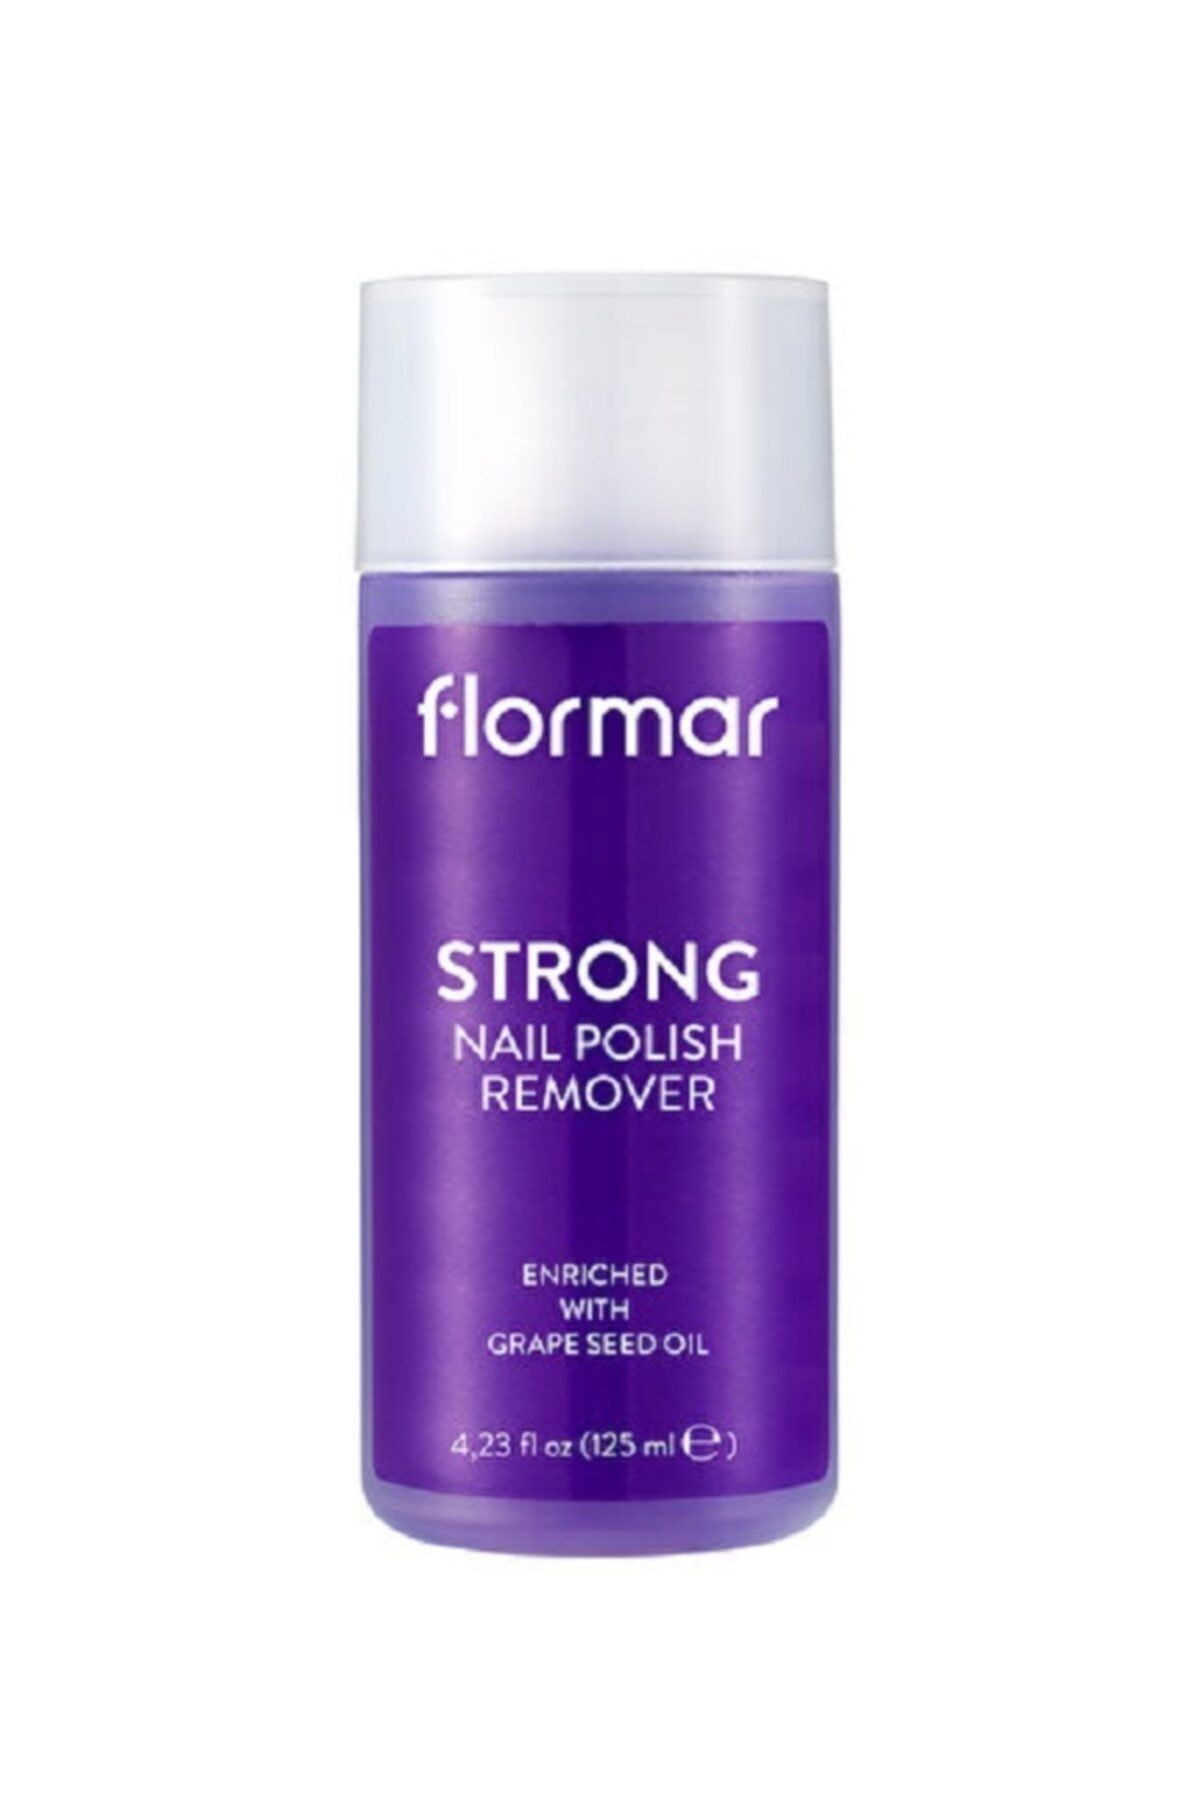 Flormar Strong Naıl Polısh Remover 007
strong Nail